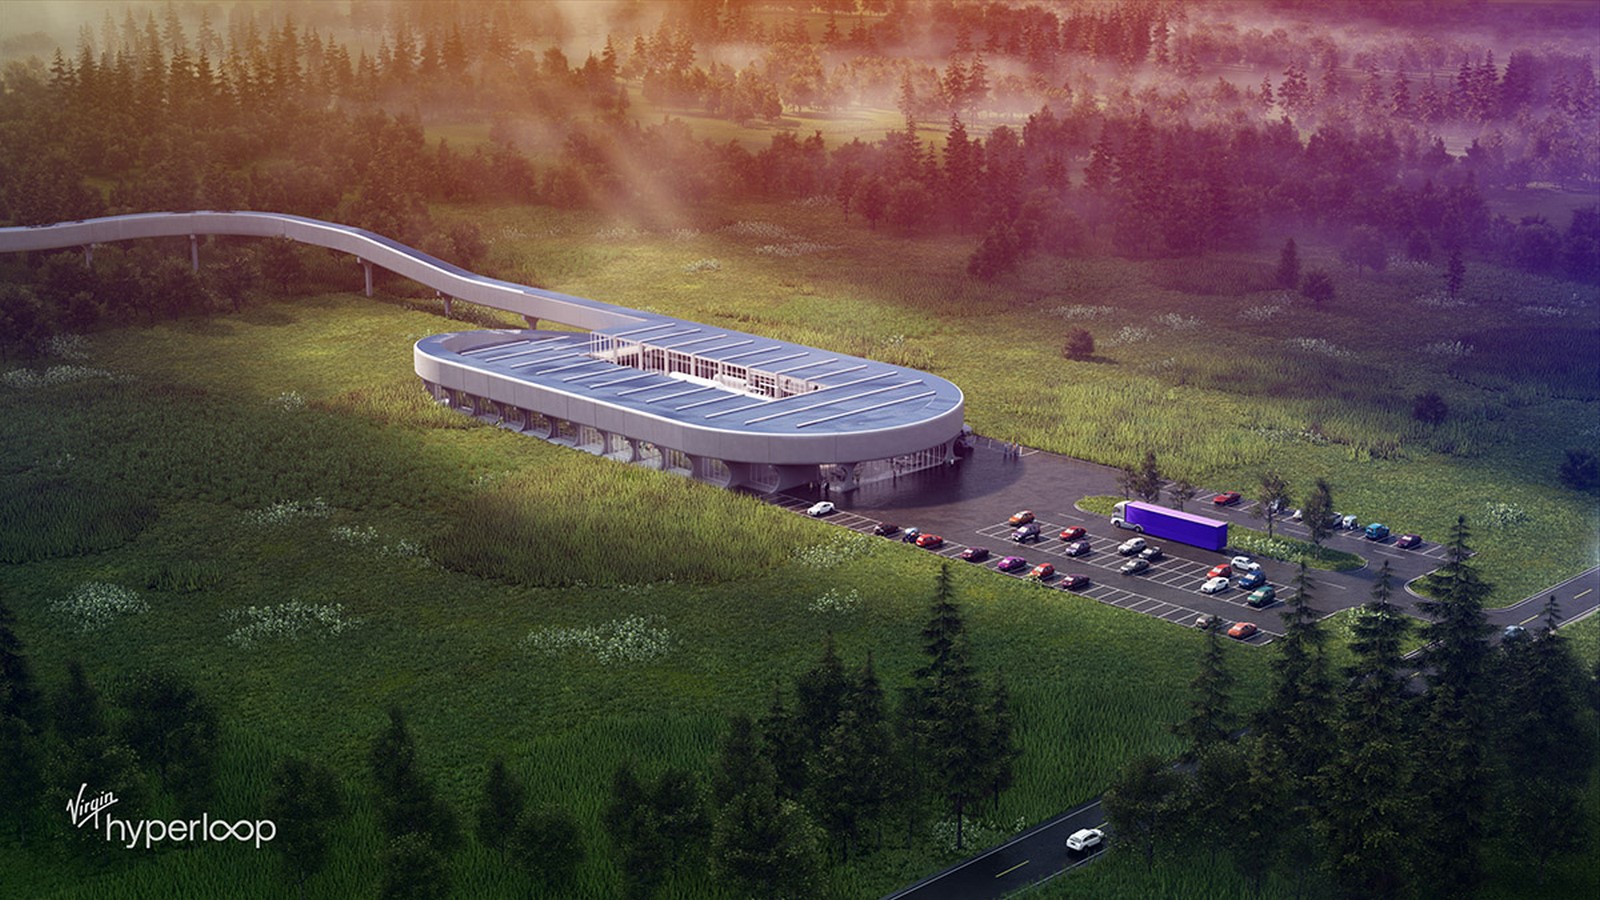 Virgin Hyperloop Certification Center for West Virginia designs revealed by BIG - Sheet4